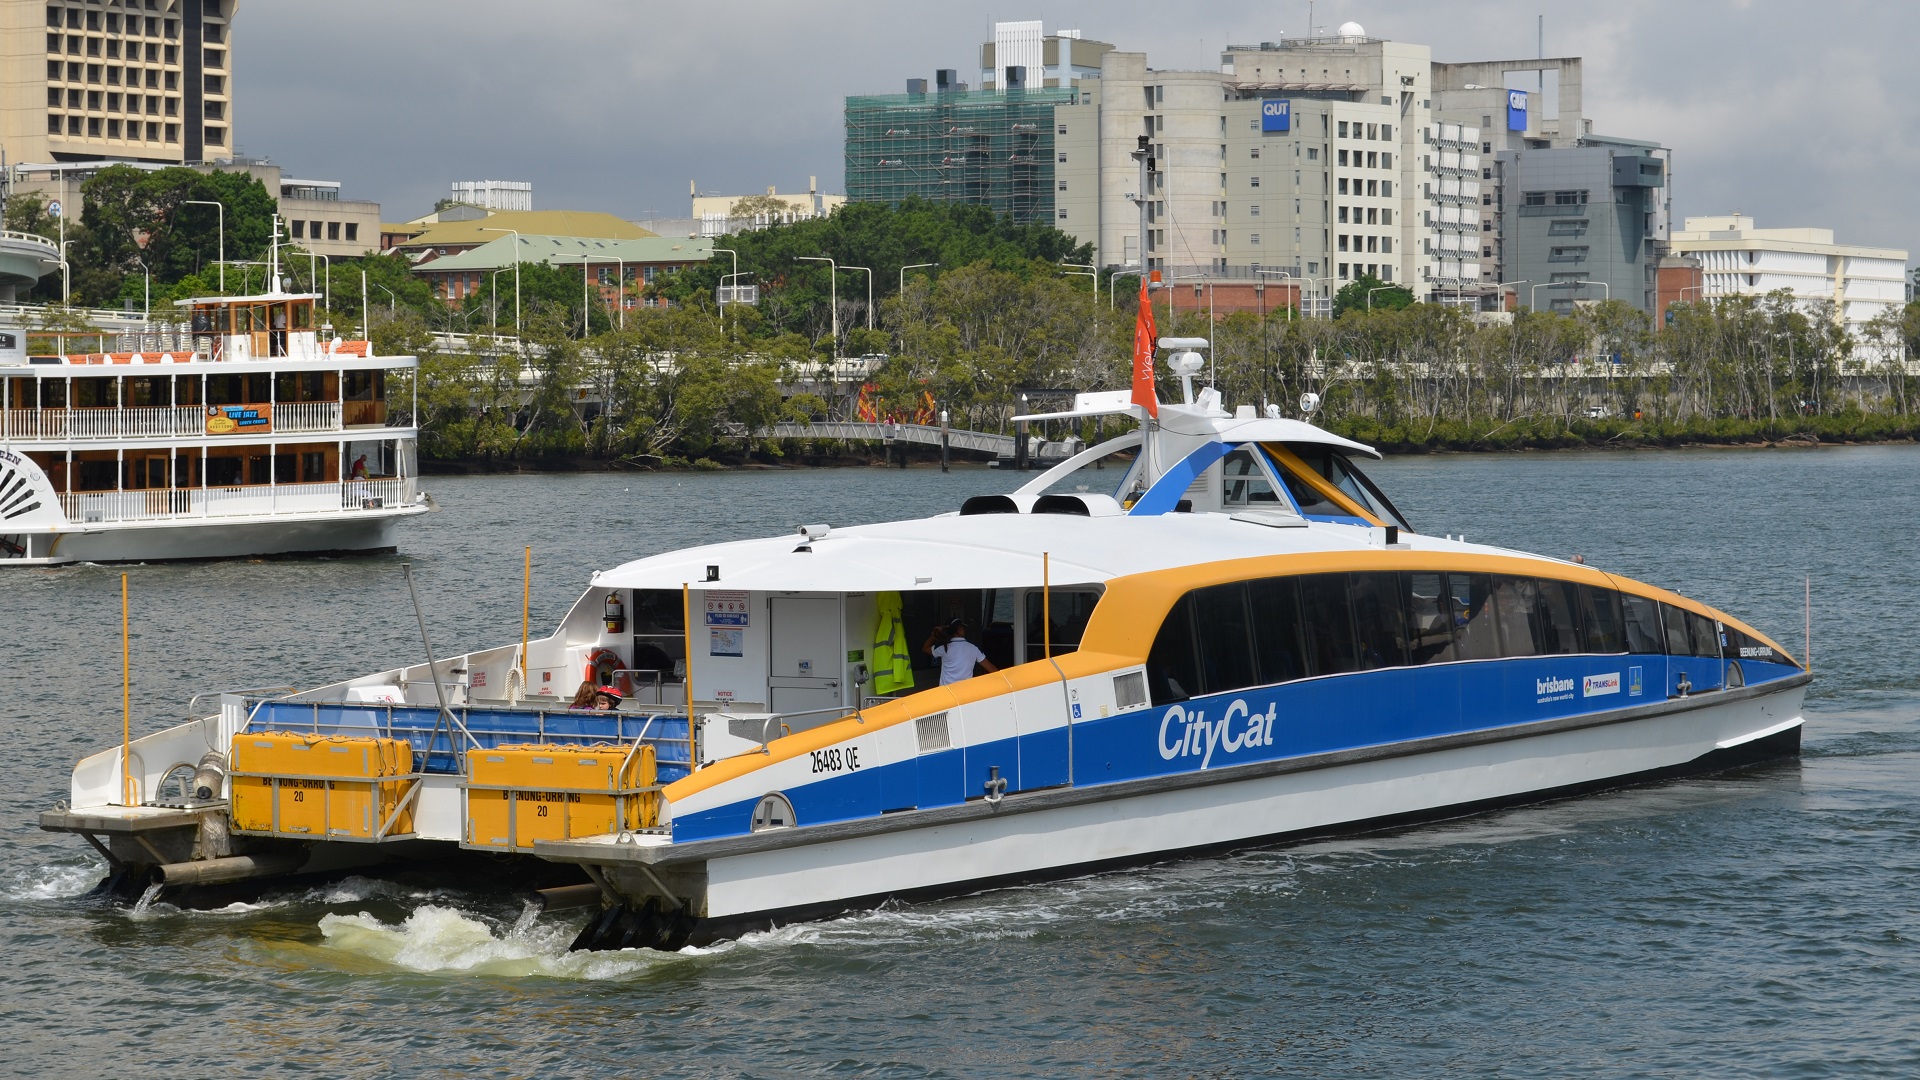 vehicles, ferry, beenung urrung, boat, brisbane, passenger ship, photography, river